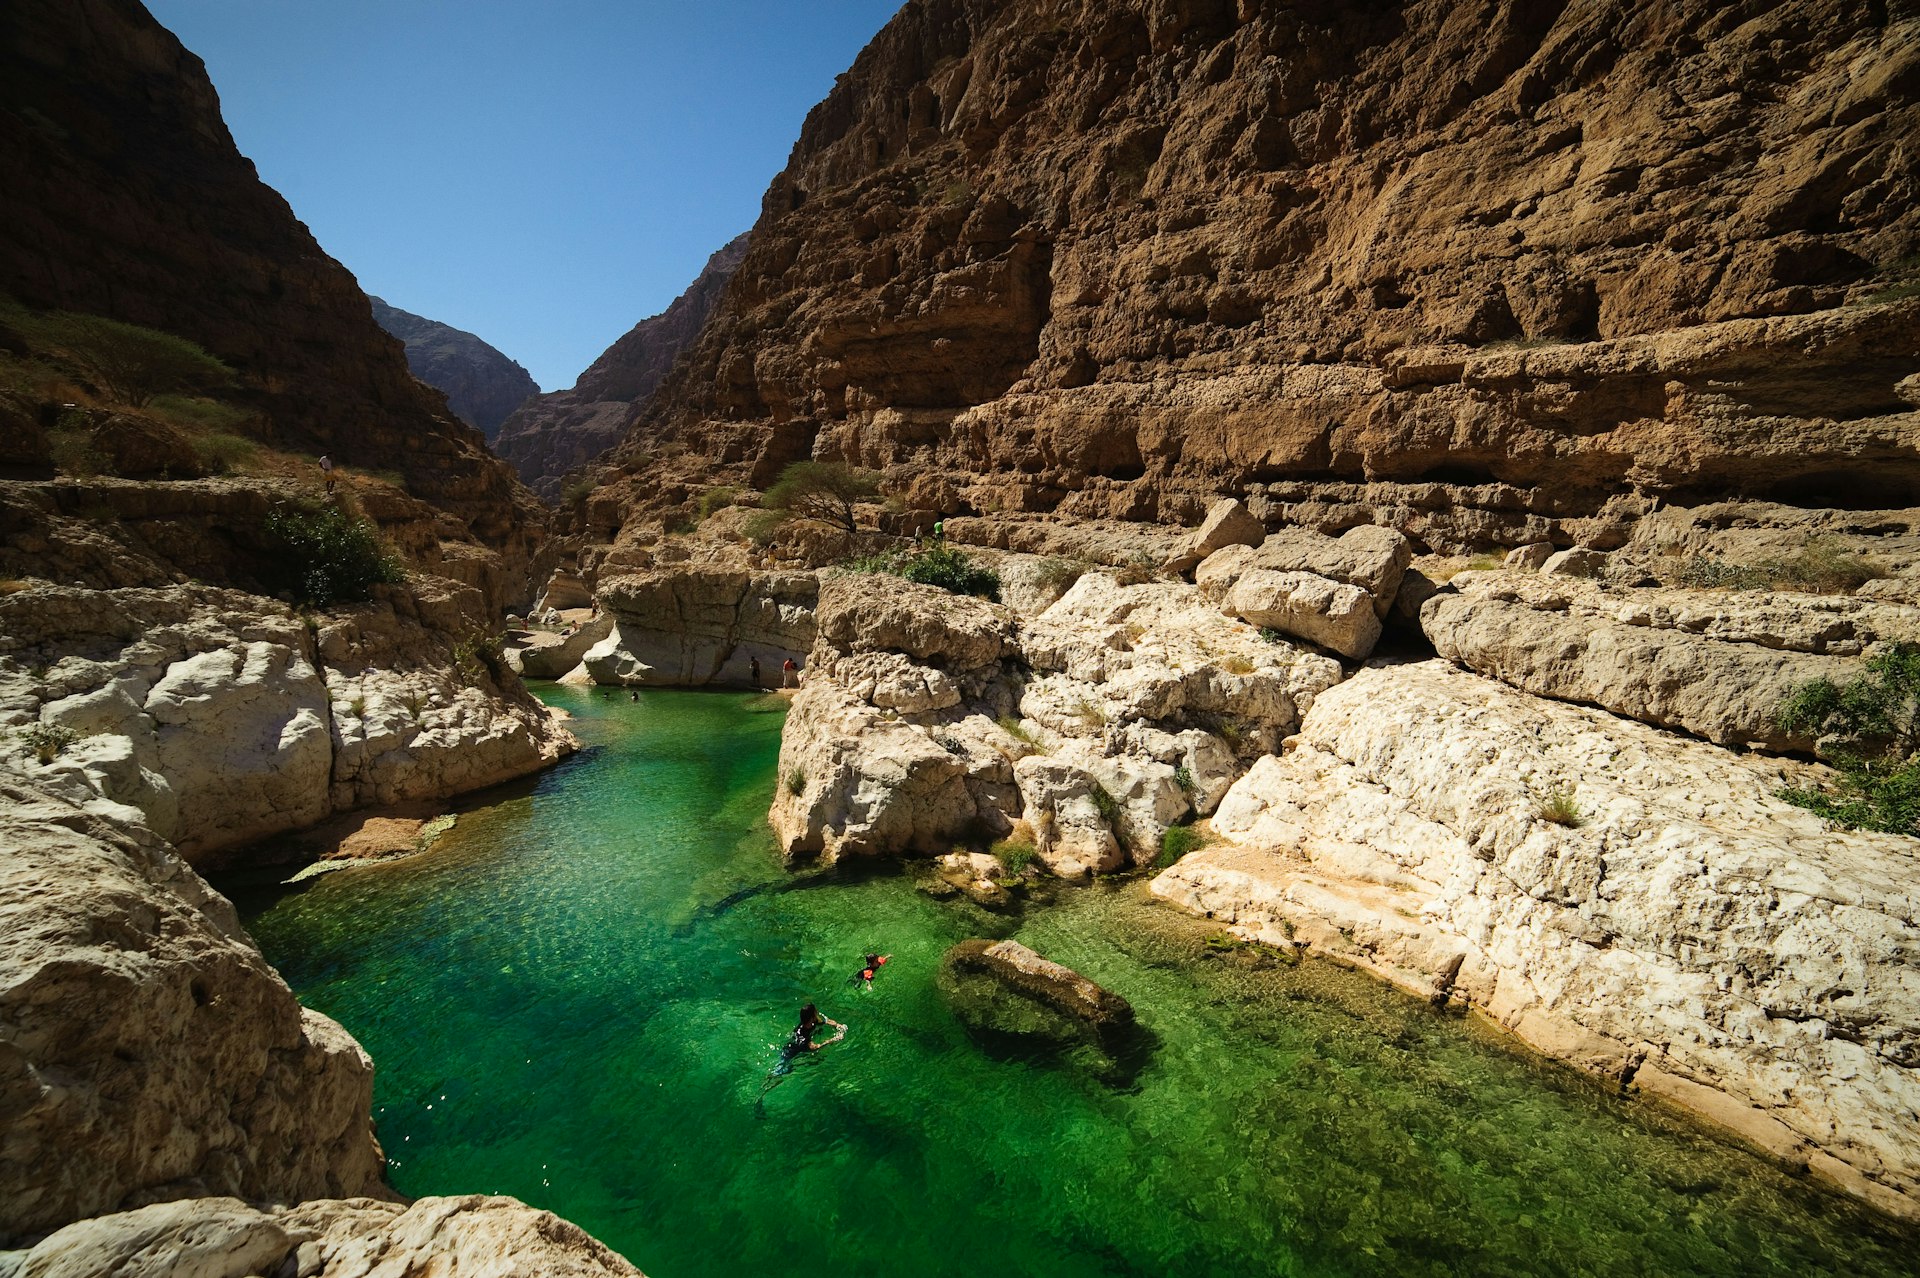 Two people swimming in the turqoise waters of Wadi Shab, Oman